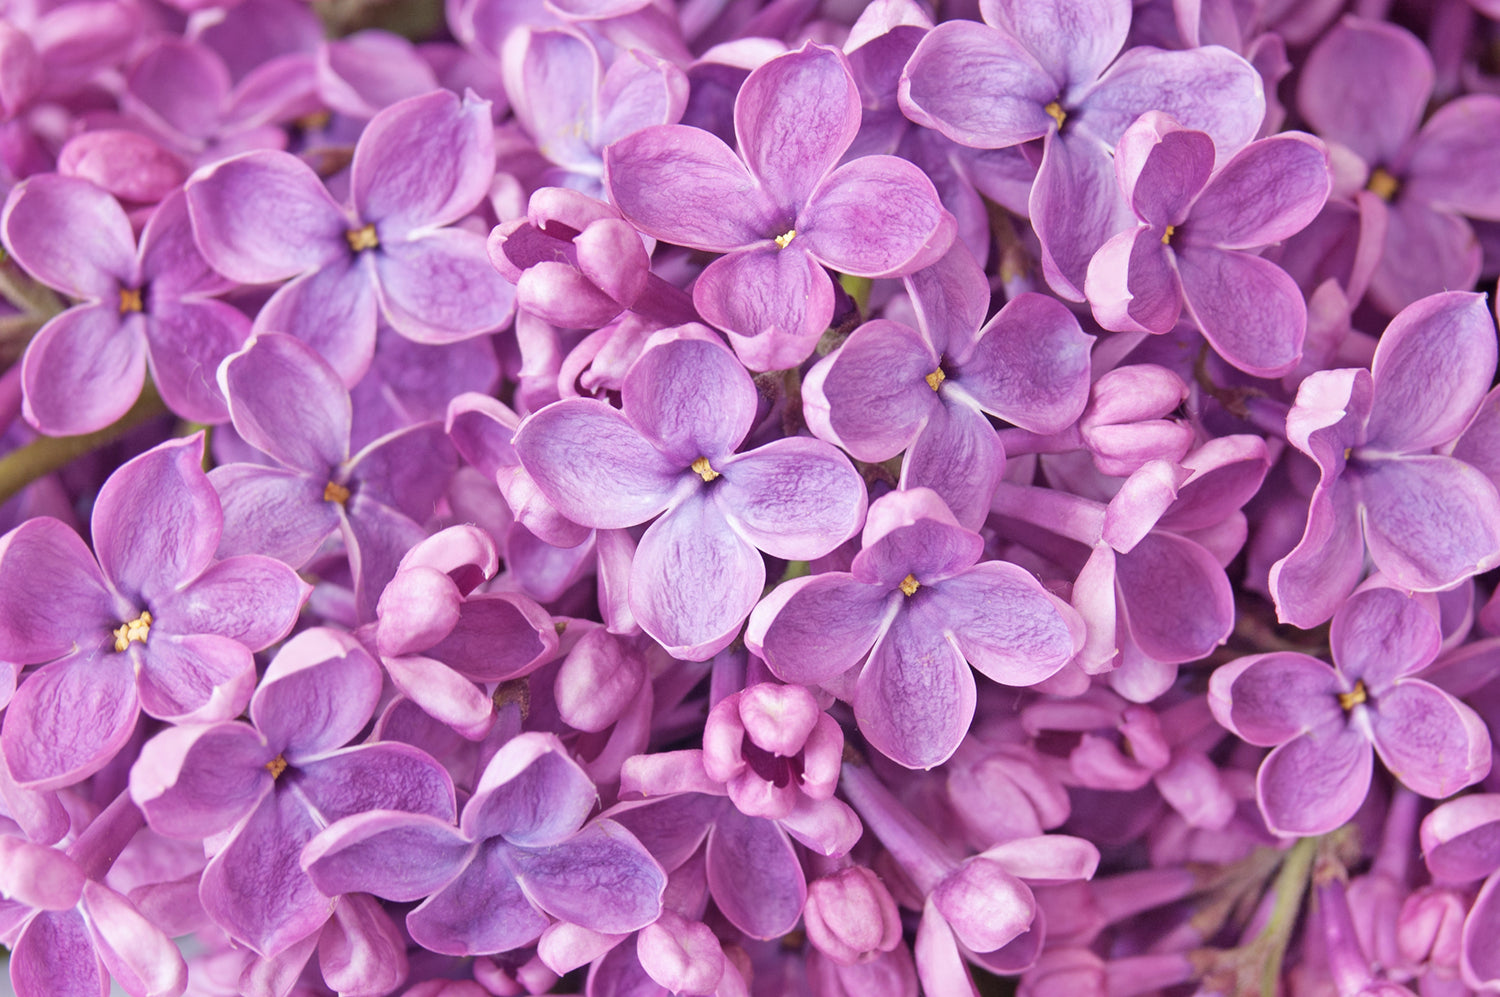 lilac Boundless wisdom Lotuswei flower essence elixir blend essences